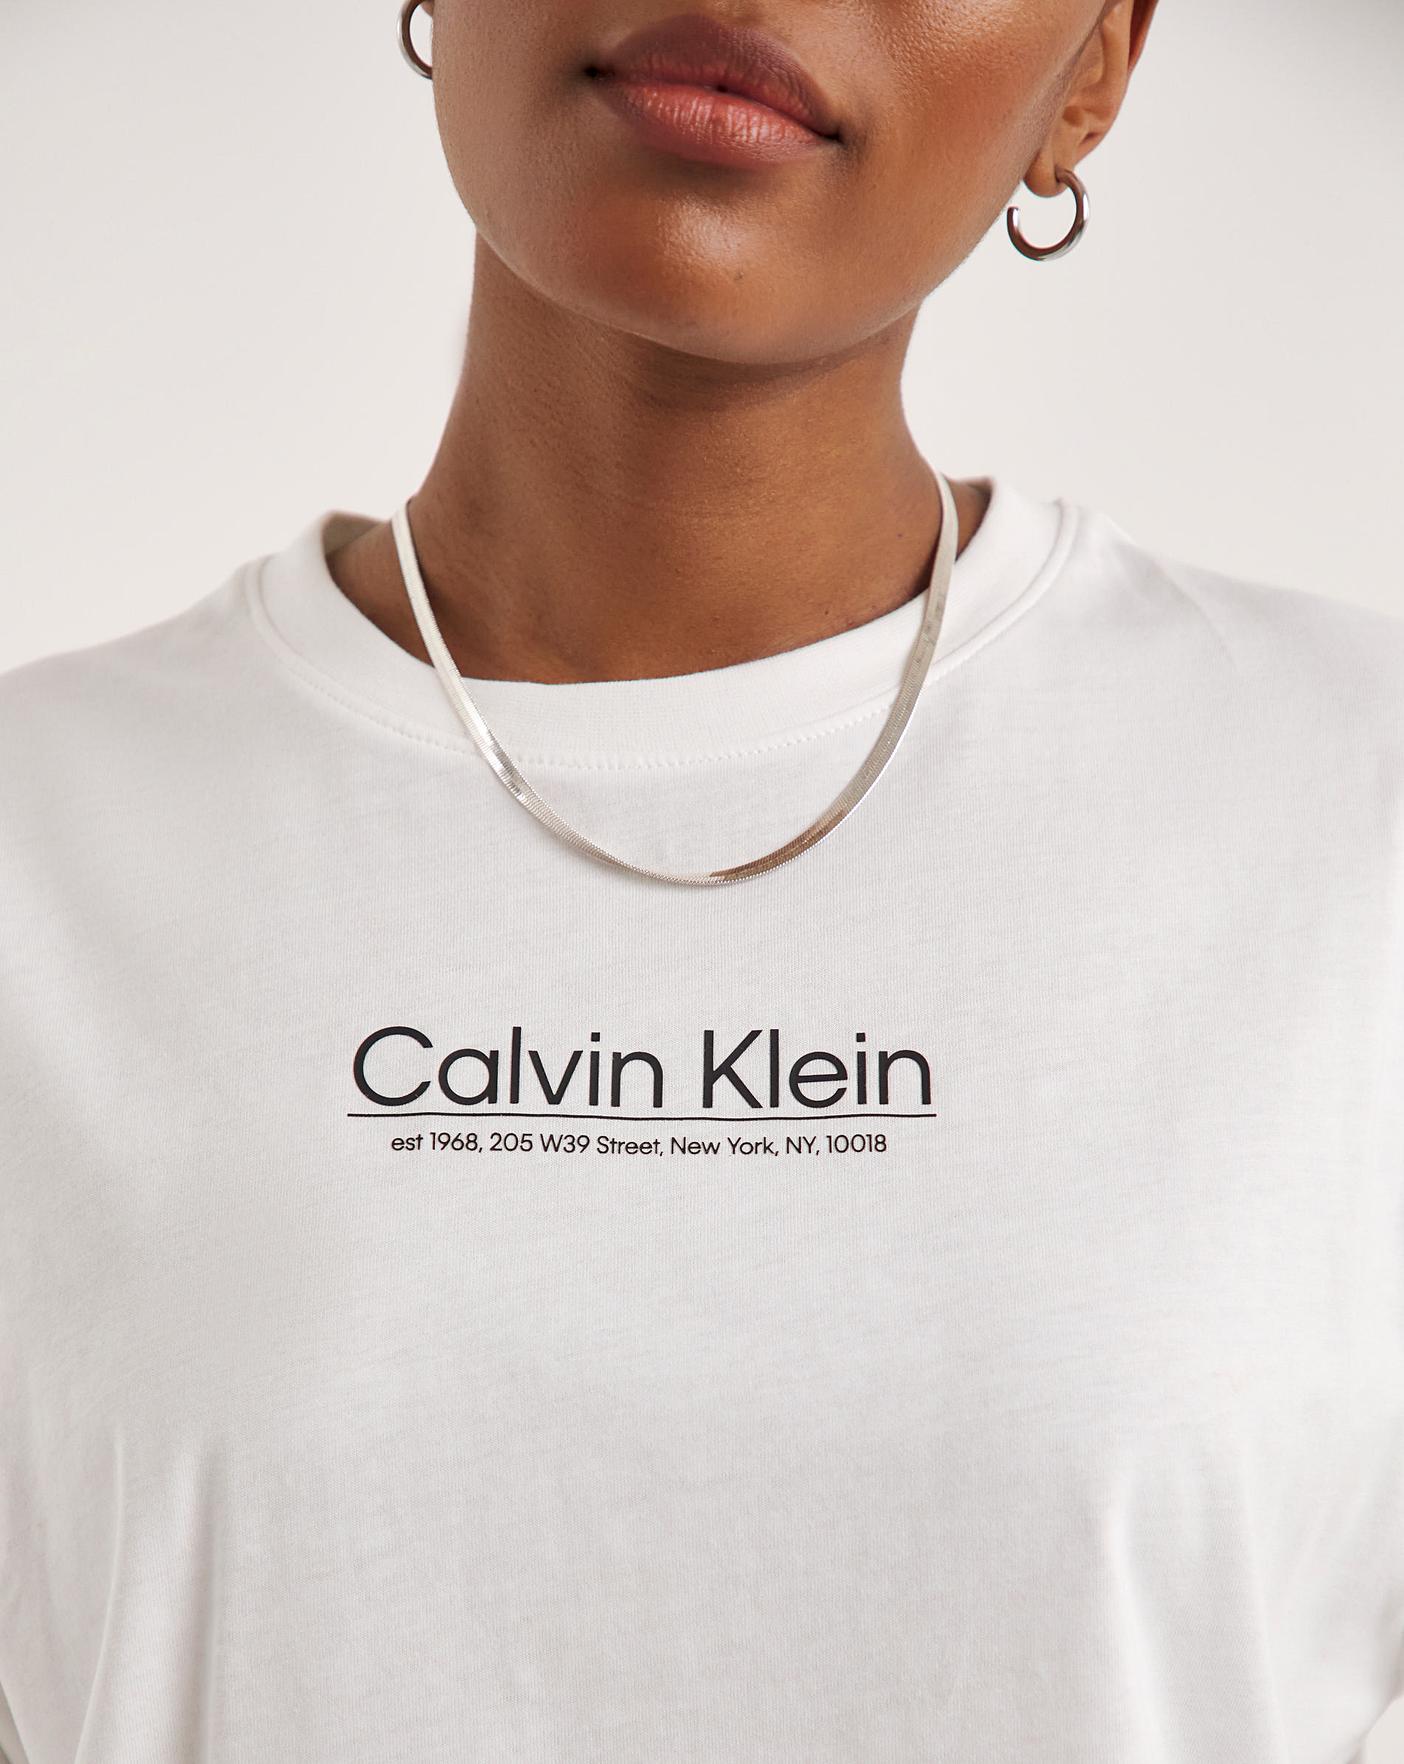 Calvin Klein Jeans New York White Tee T Shirt White - Medium Crew